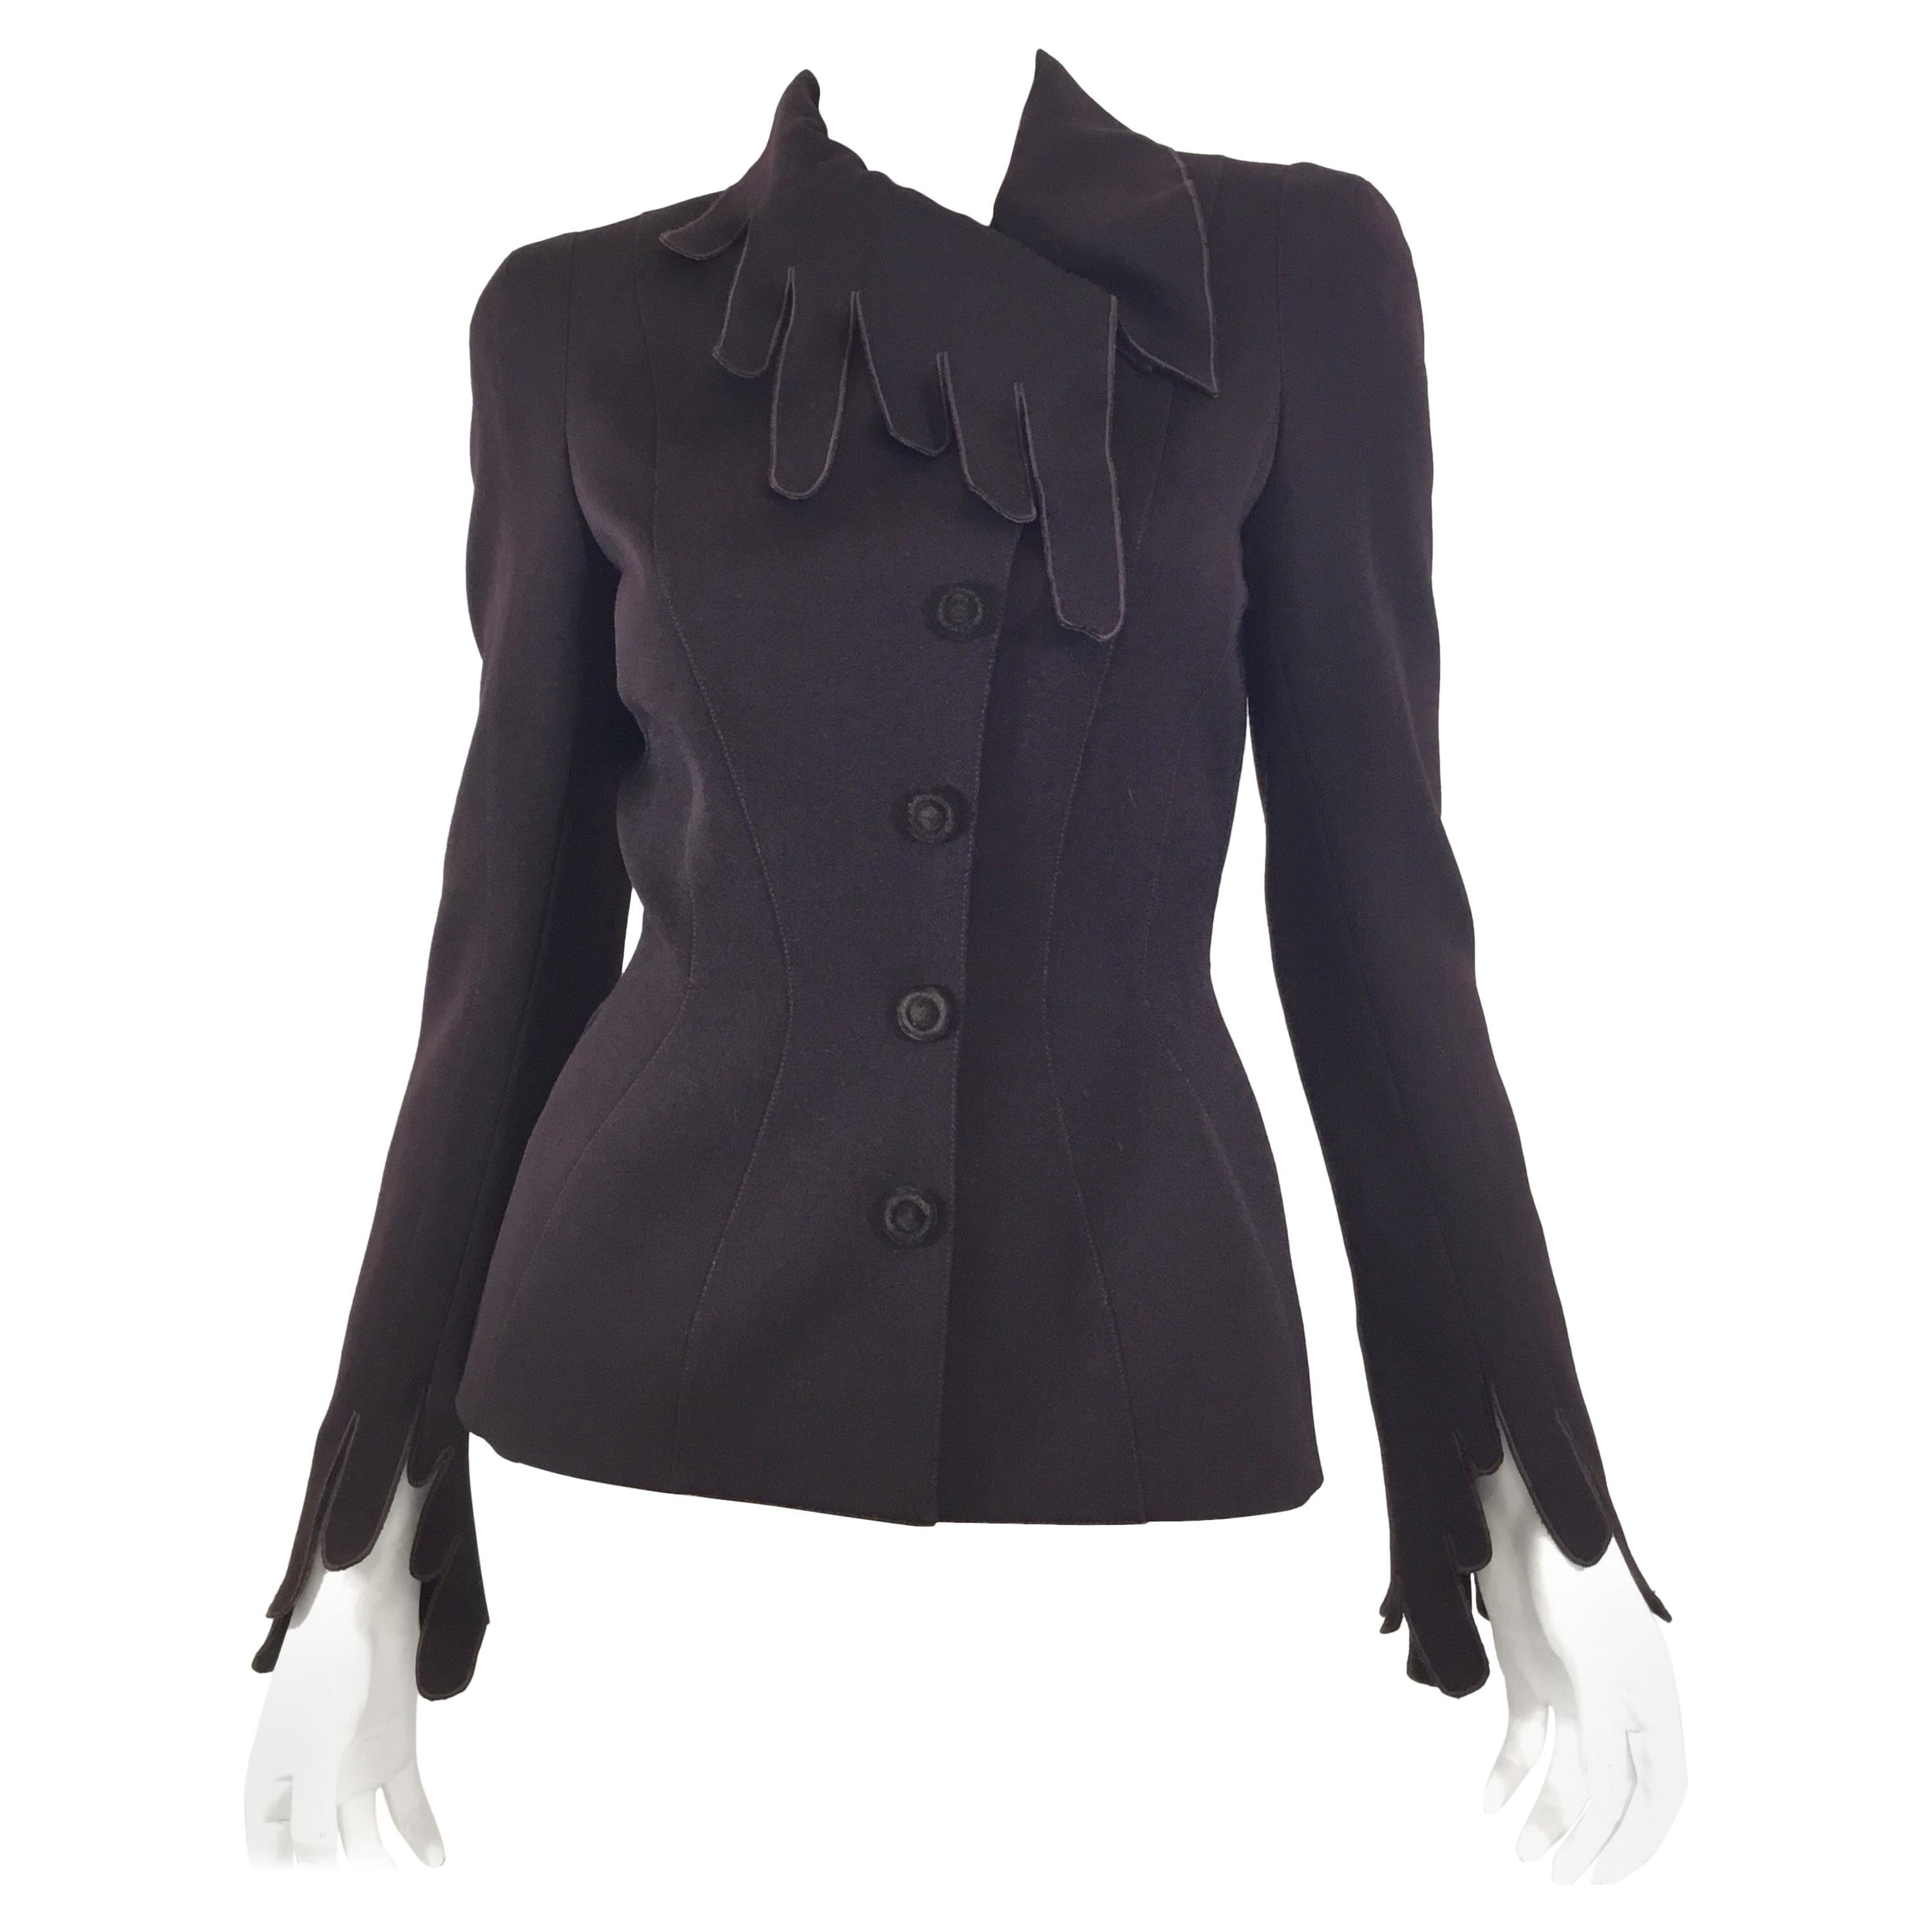 Thierry Mugler Brown Vintage Jacket and Skirt Set